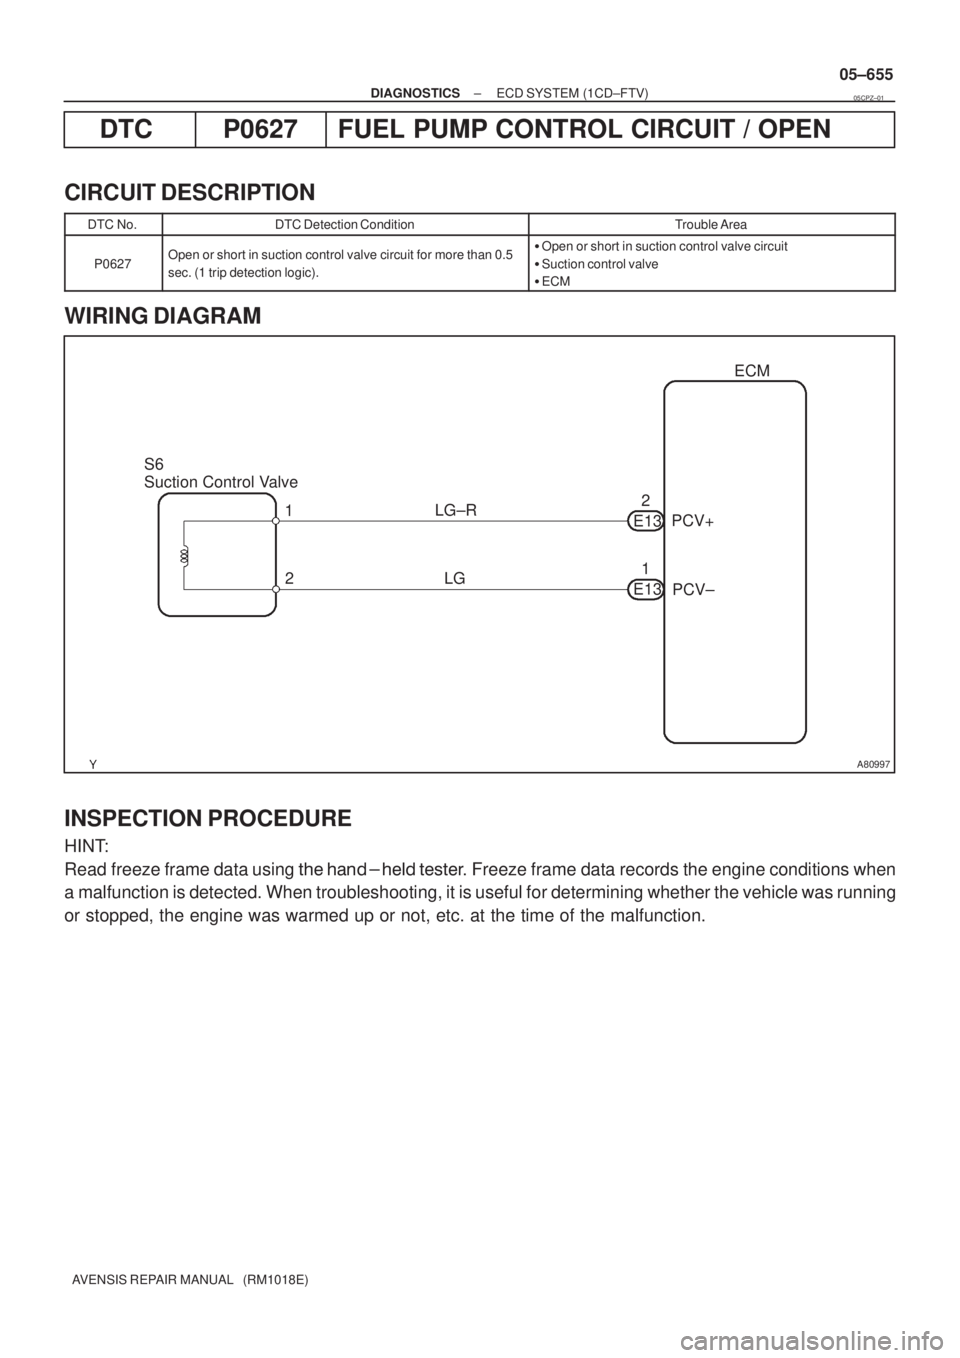 TOYOTA AVENSIS 2005  Service Repair Manual A80997
S6 
Suction Control ValveECM
E132
PCV+
2 1
LG LG±R
PCV± E131
± DIAGNOSTICSECD SYSTEM (1CD±FTV)
05±655
AVENSIS REPAIR MANUAL   (RM1018E)
DTC P0627 FUEL PUMP CONTROL CIRCUIT / OPEN
CIRCUIT D